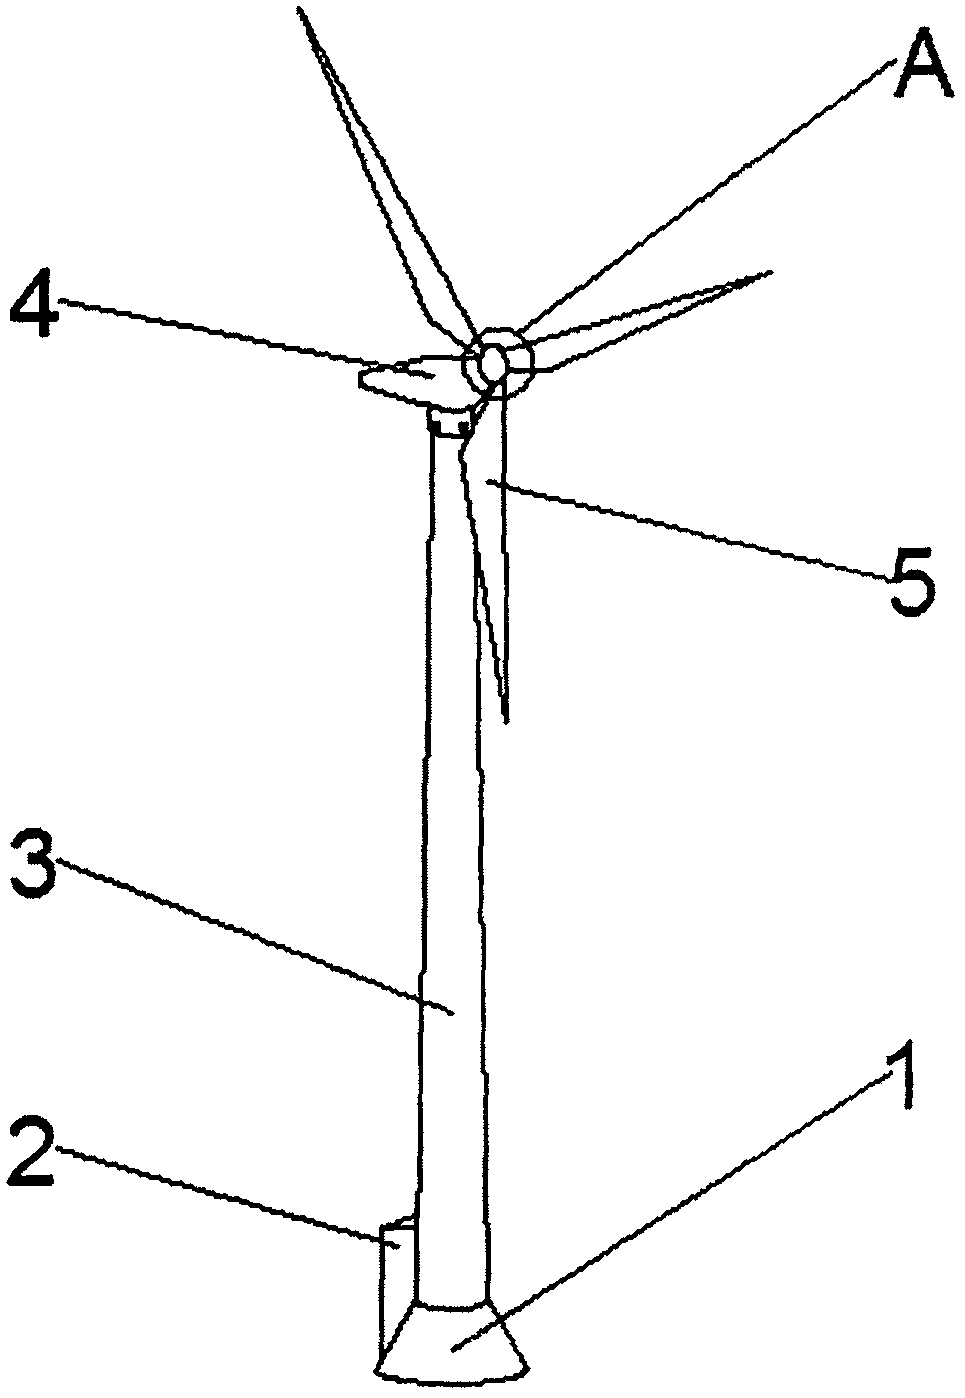 Wind-driven generator device